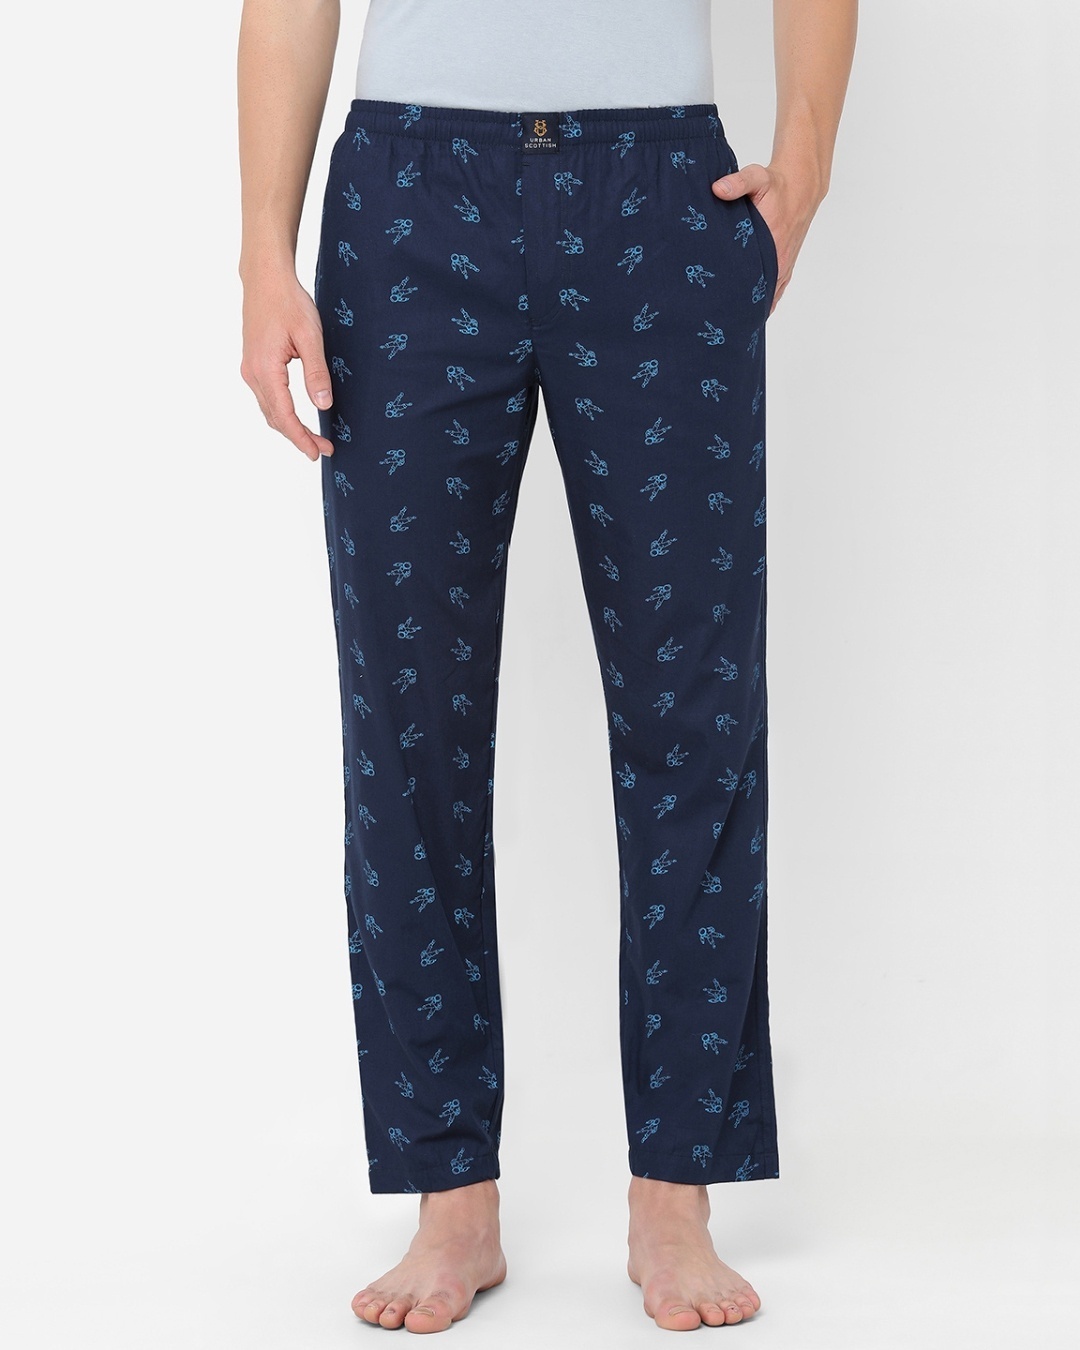 Mens Sweatpants | Mens Drawstring Pajama Pants | Fishers Finery